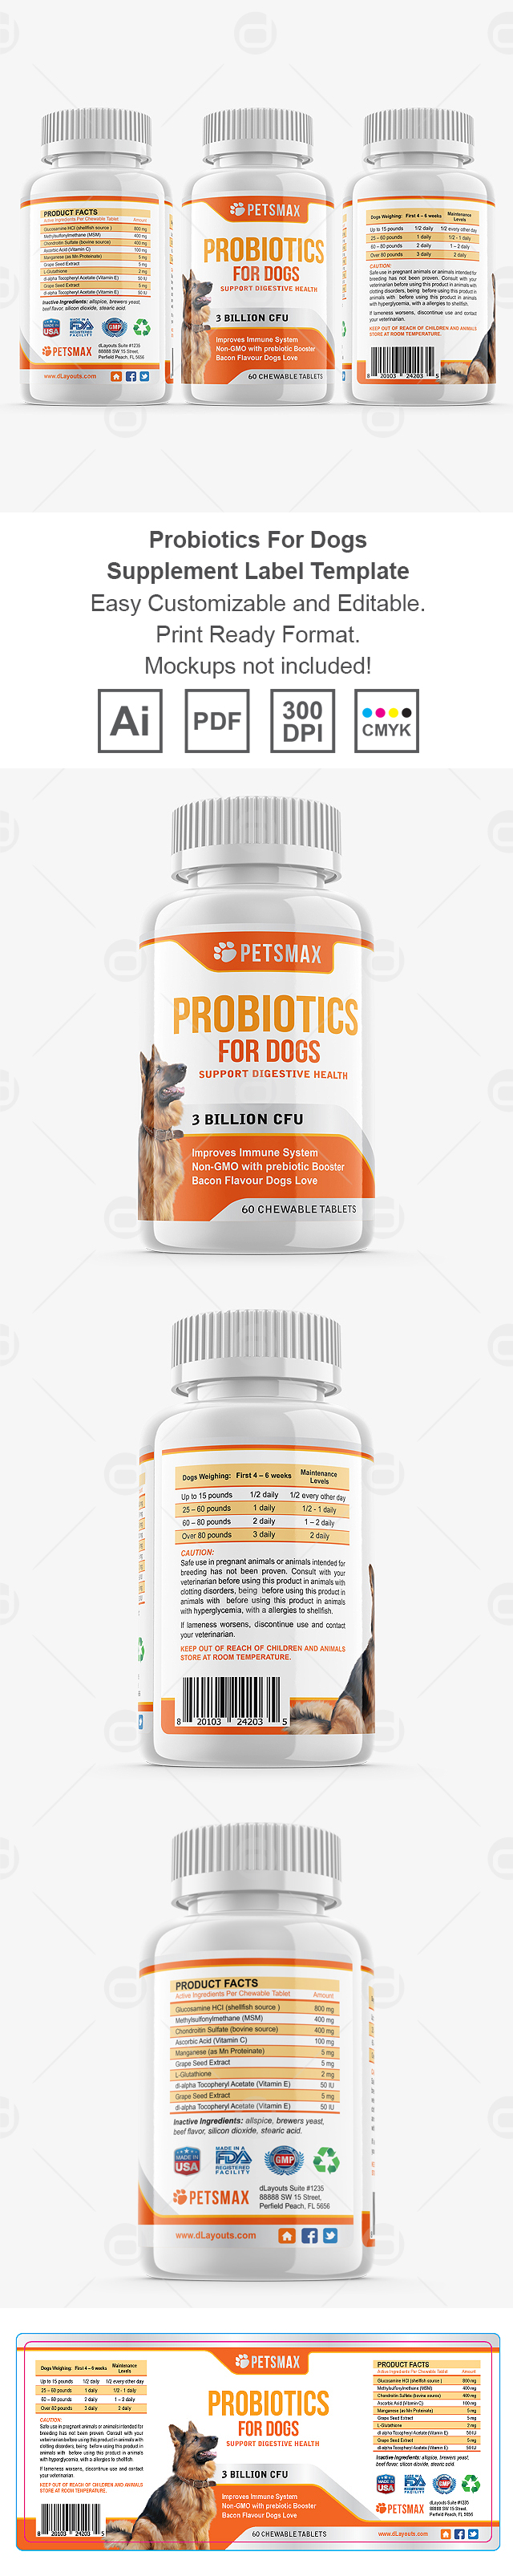 Dog Probiotics Supplement Label Template